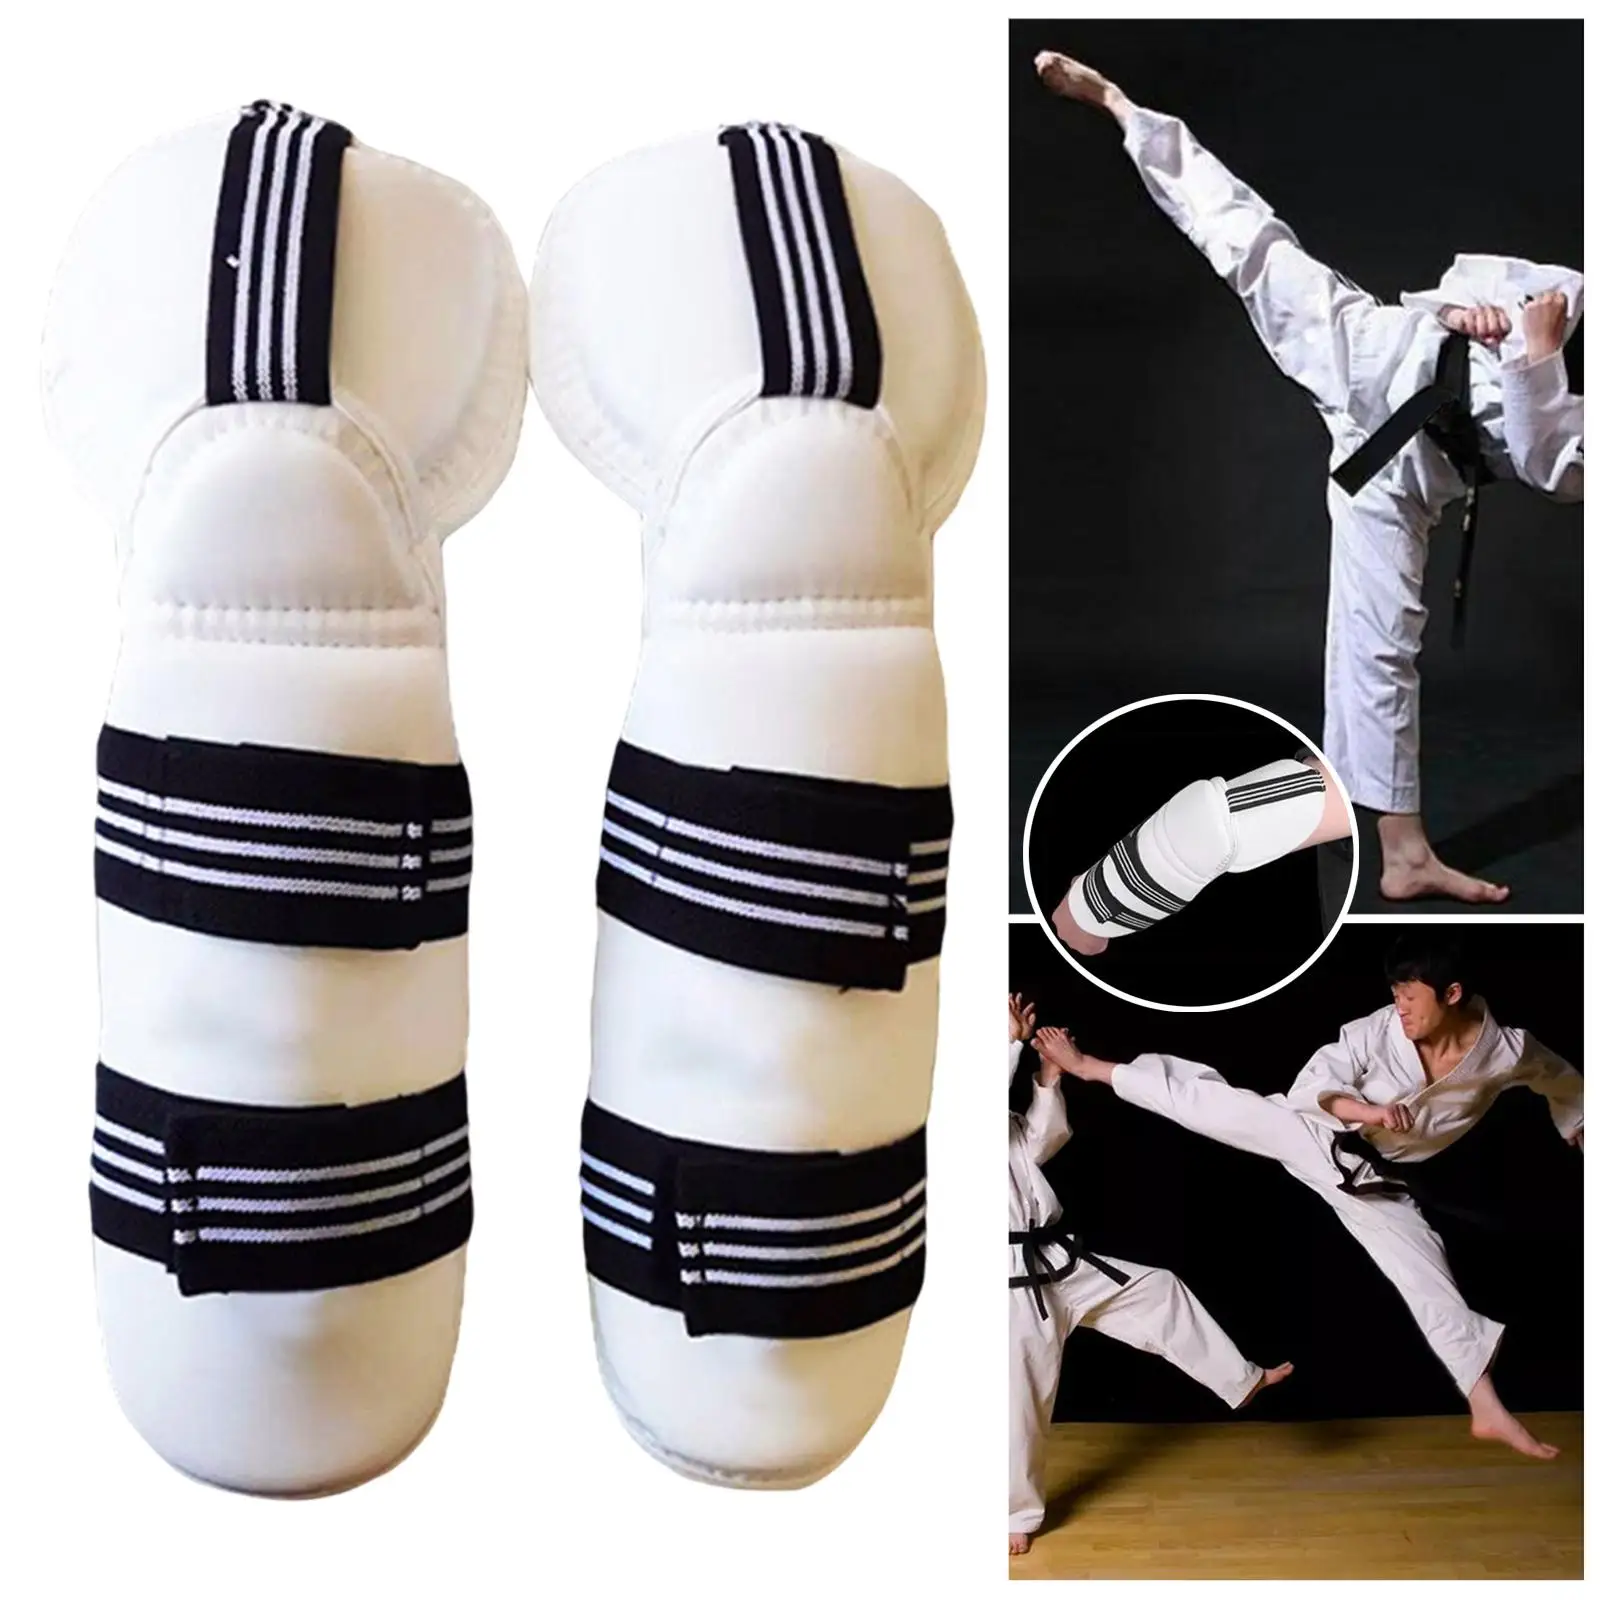 Taekwondo Guard Breathable Protective Gear for Sanda Mma Fighting Grappling